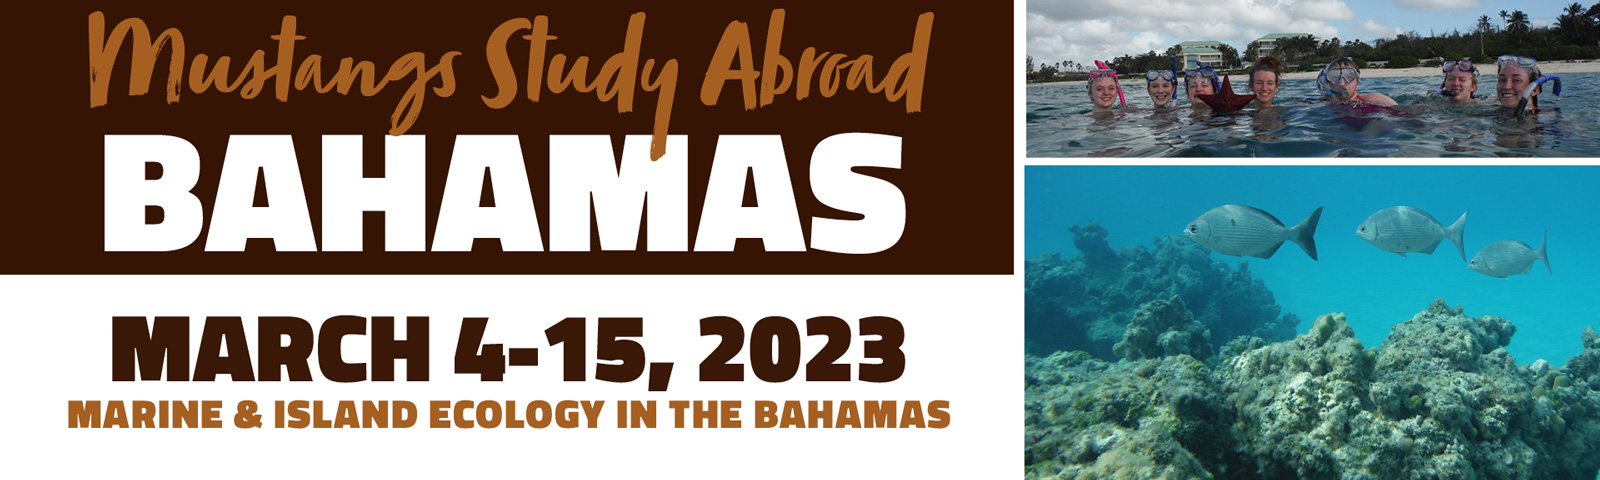 mustangs travel bahamas 2023